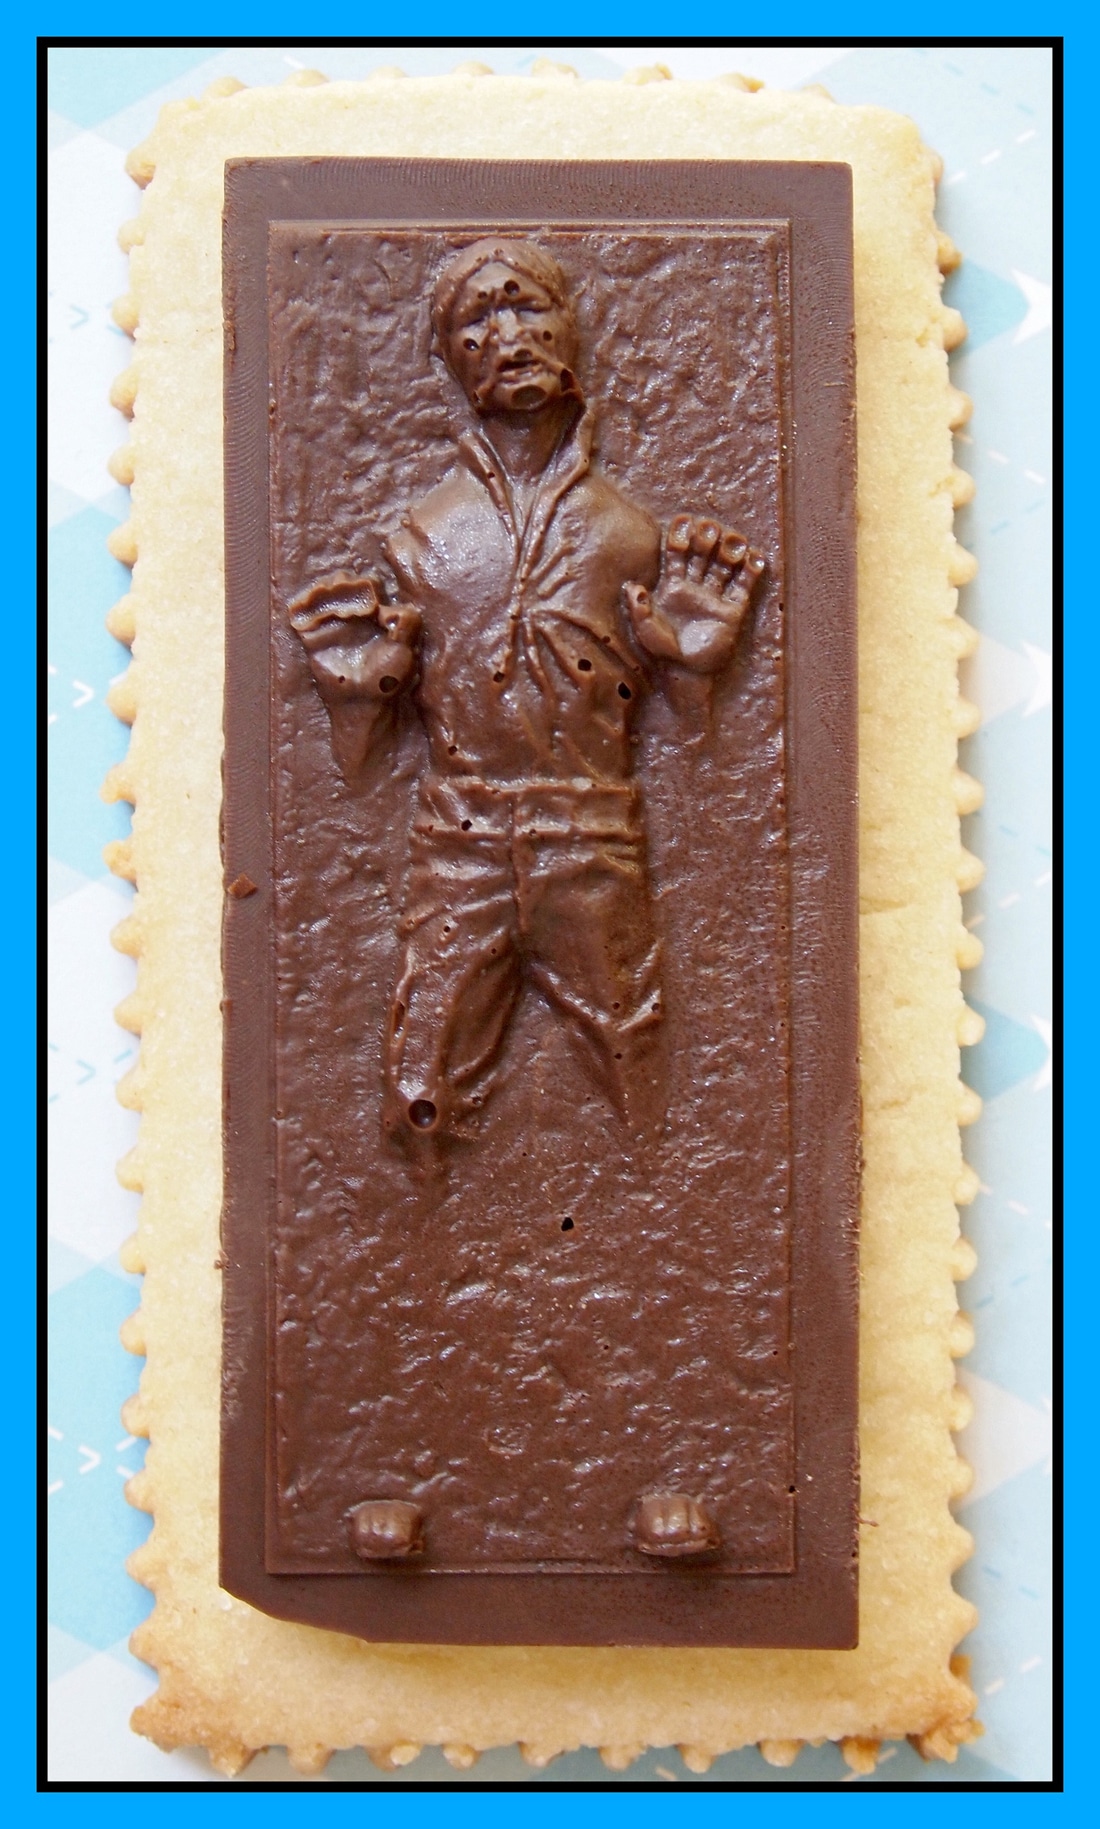 Han-Solo-Chocolate-Cookies